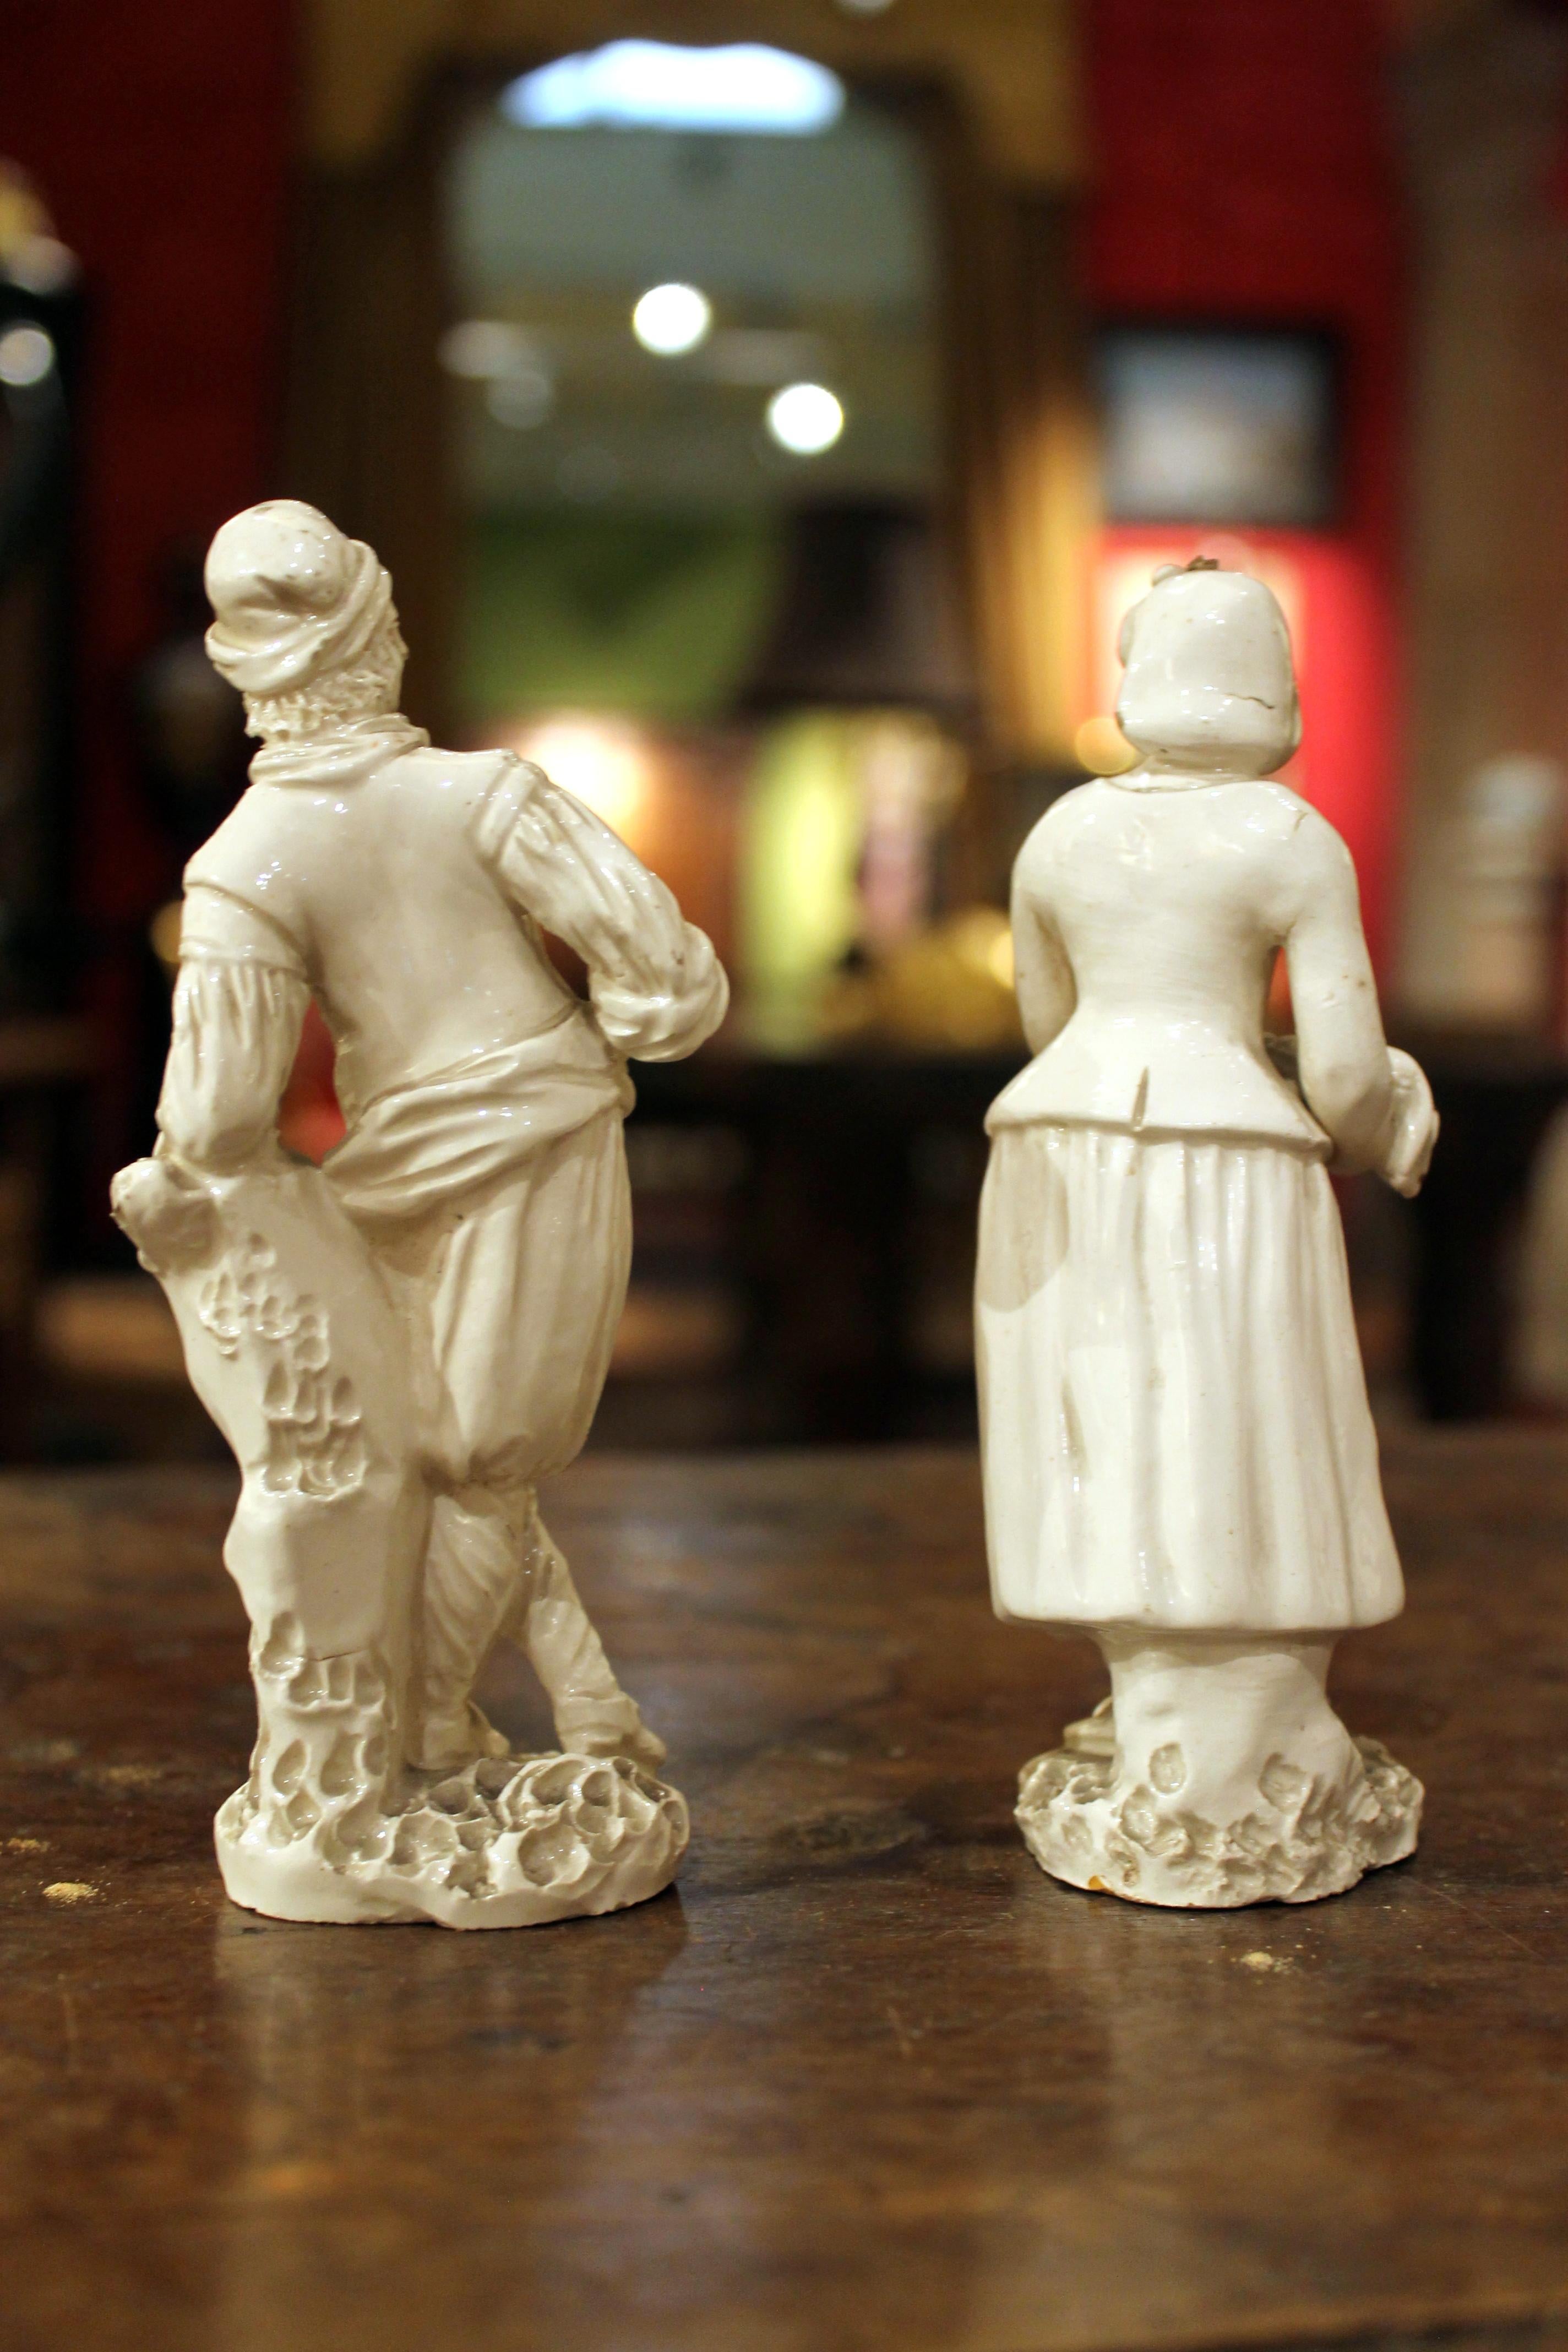 white porcelain figurines